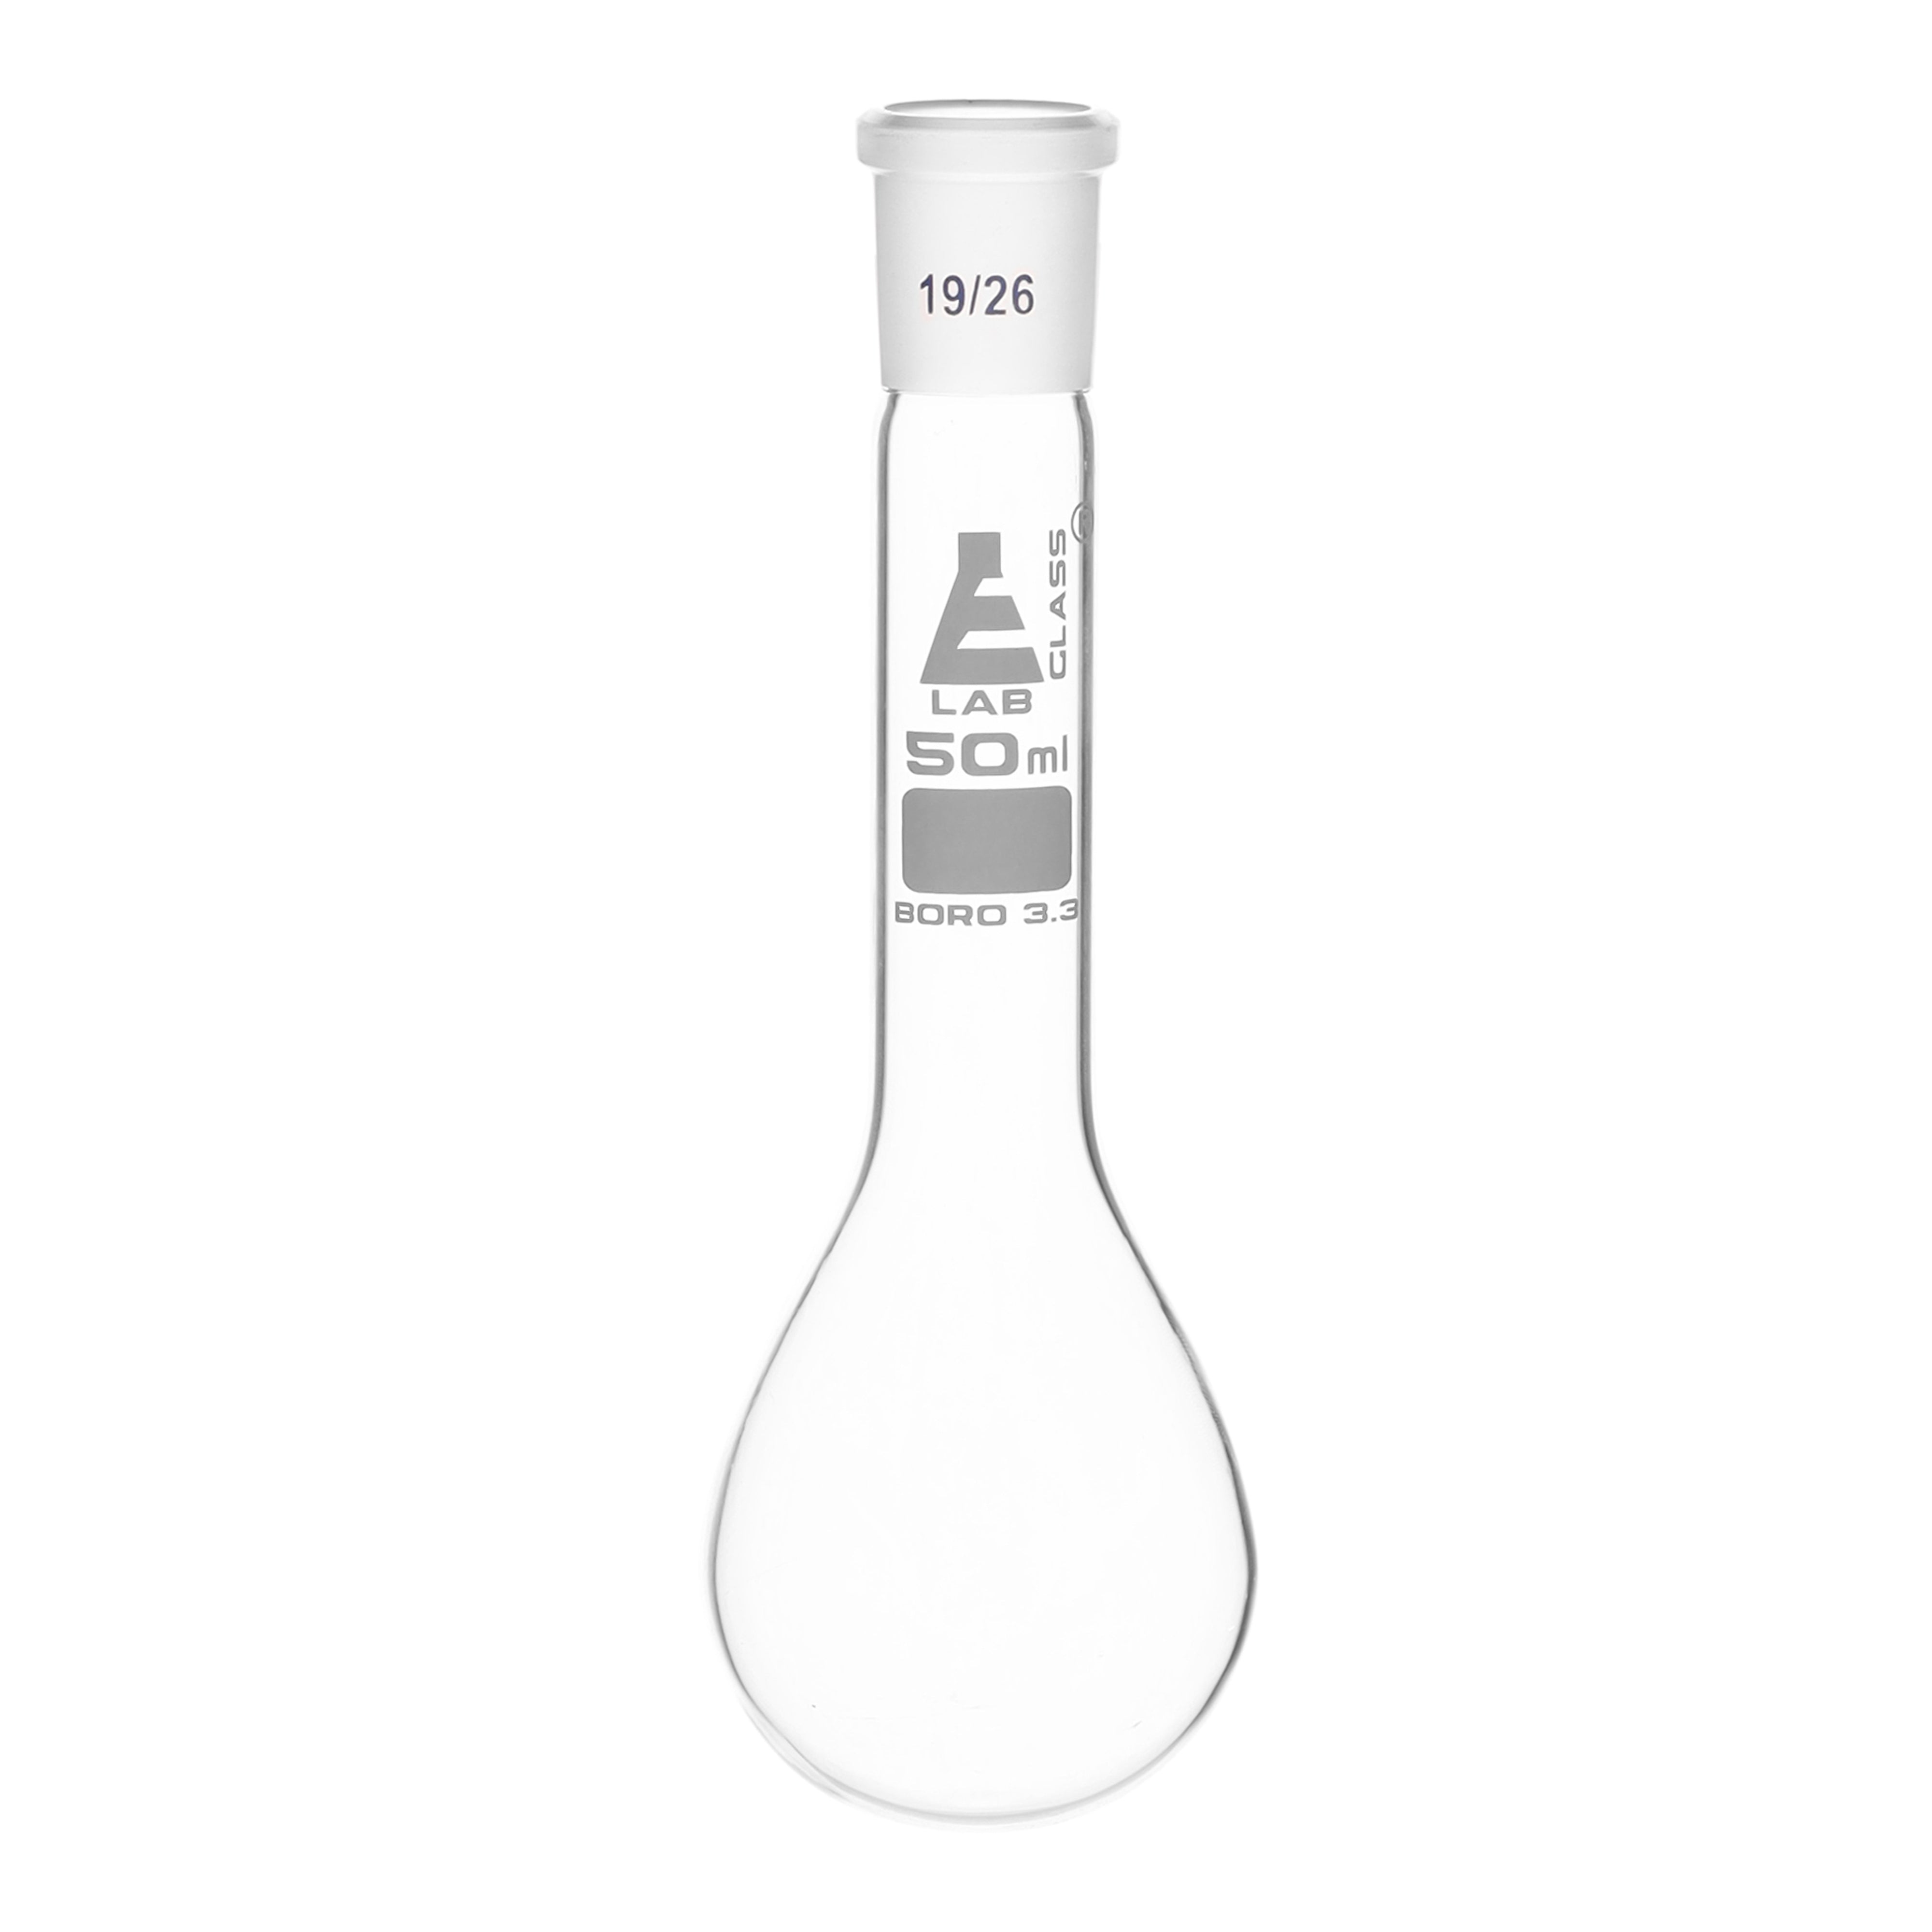 Borosilicate Kjeldahl Flask with Standard Ground Joint 19/26, 50 ml, Autoclavable